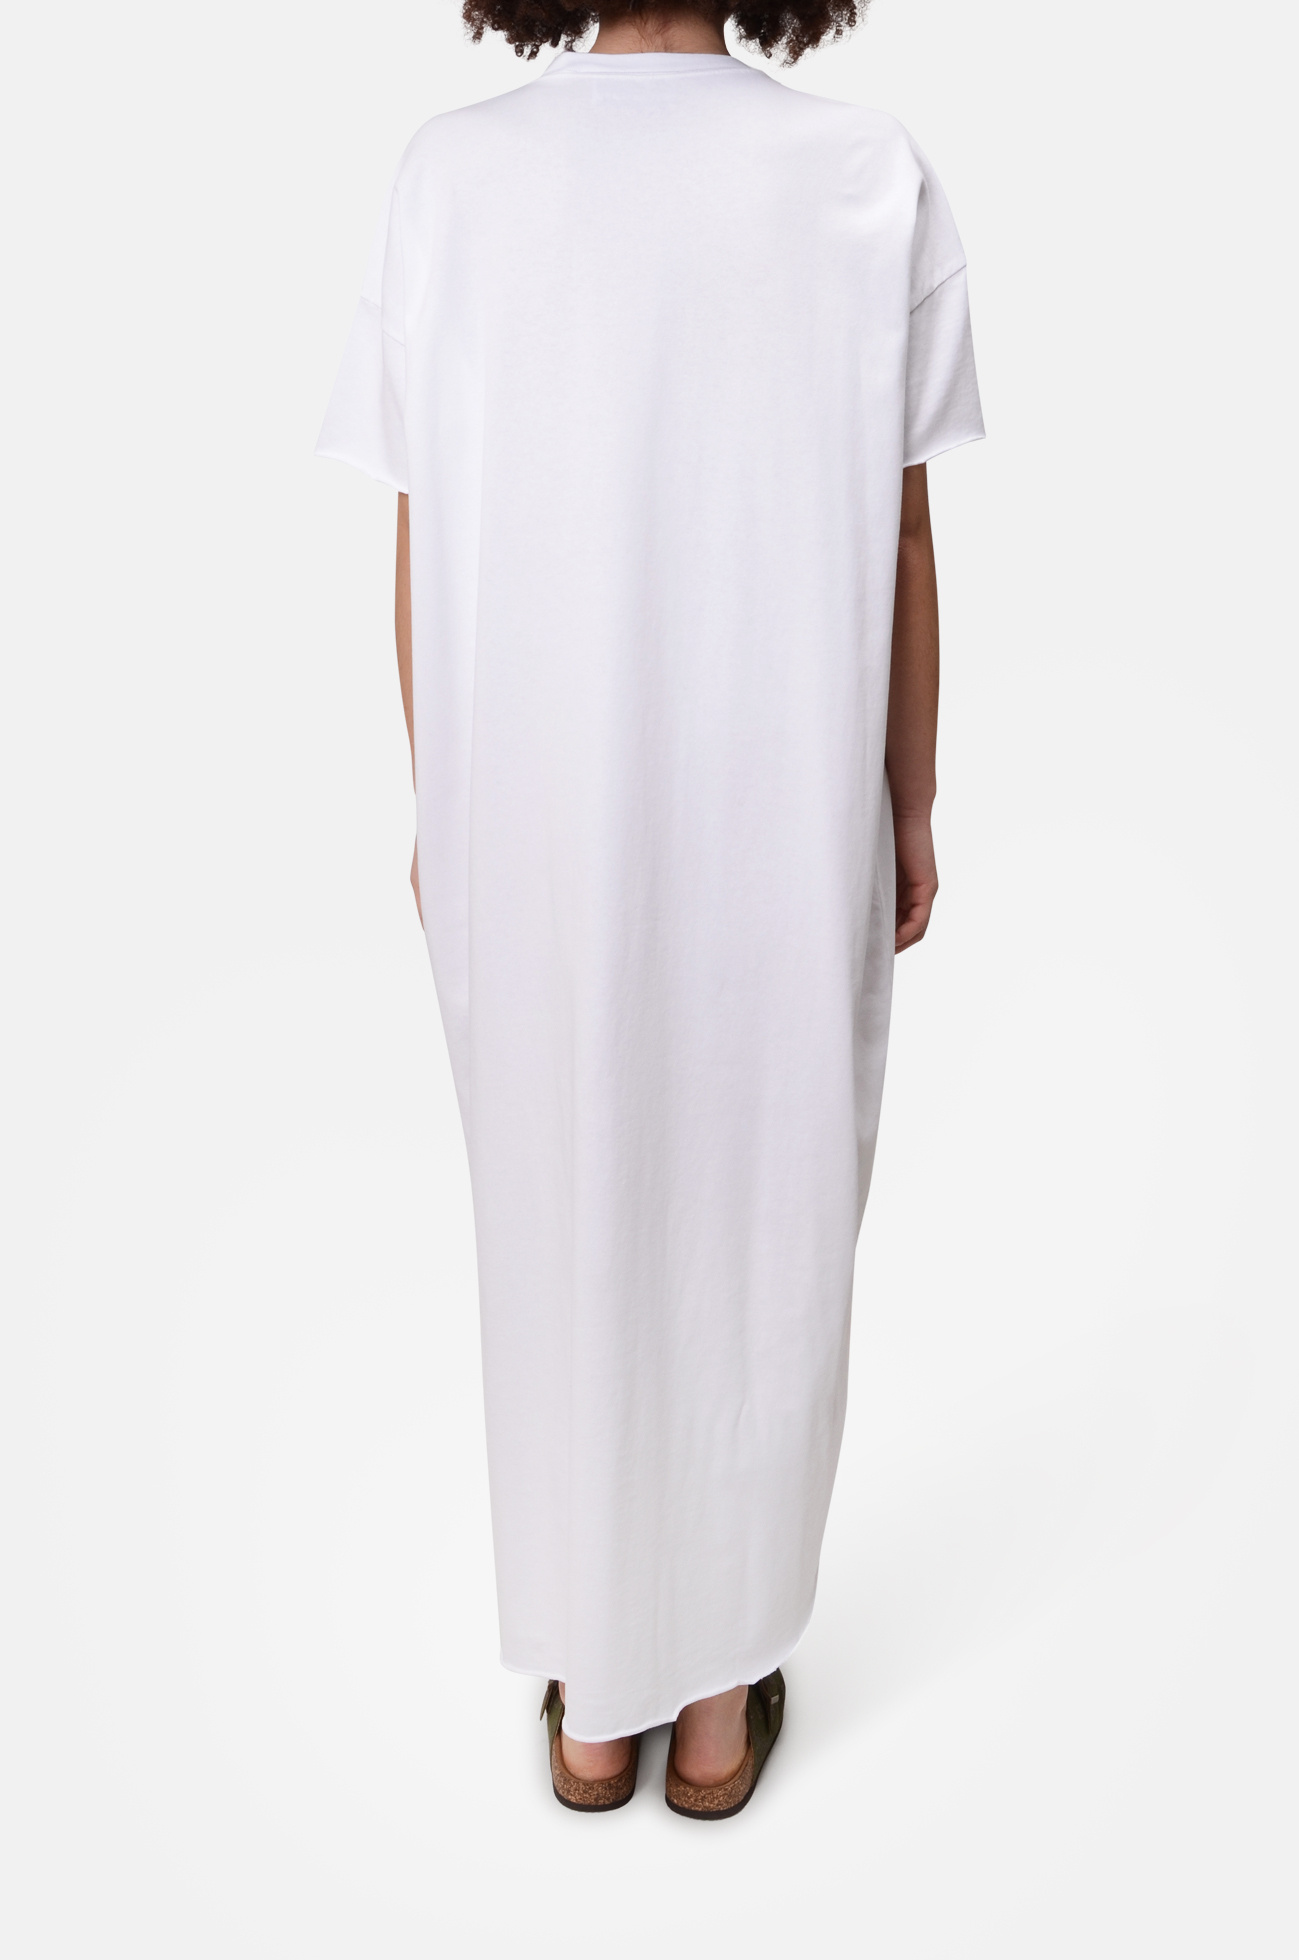 Gigi Dress in white-4